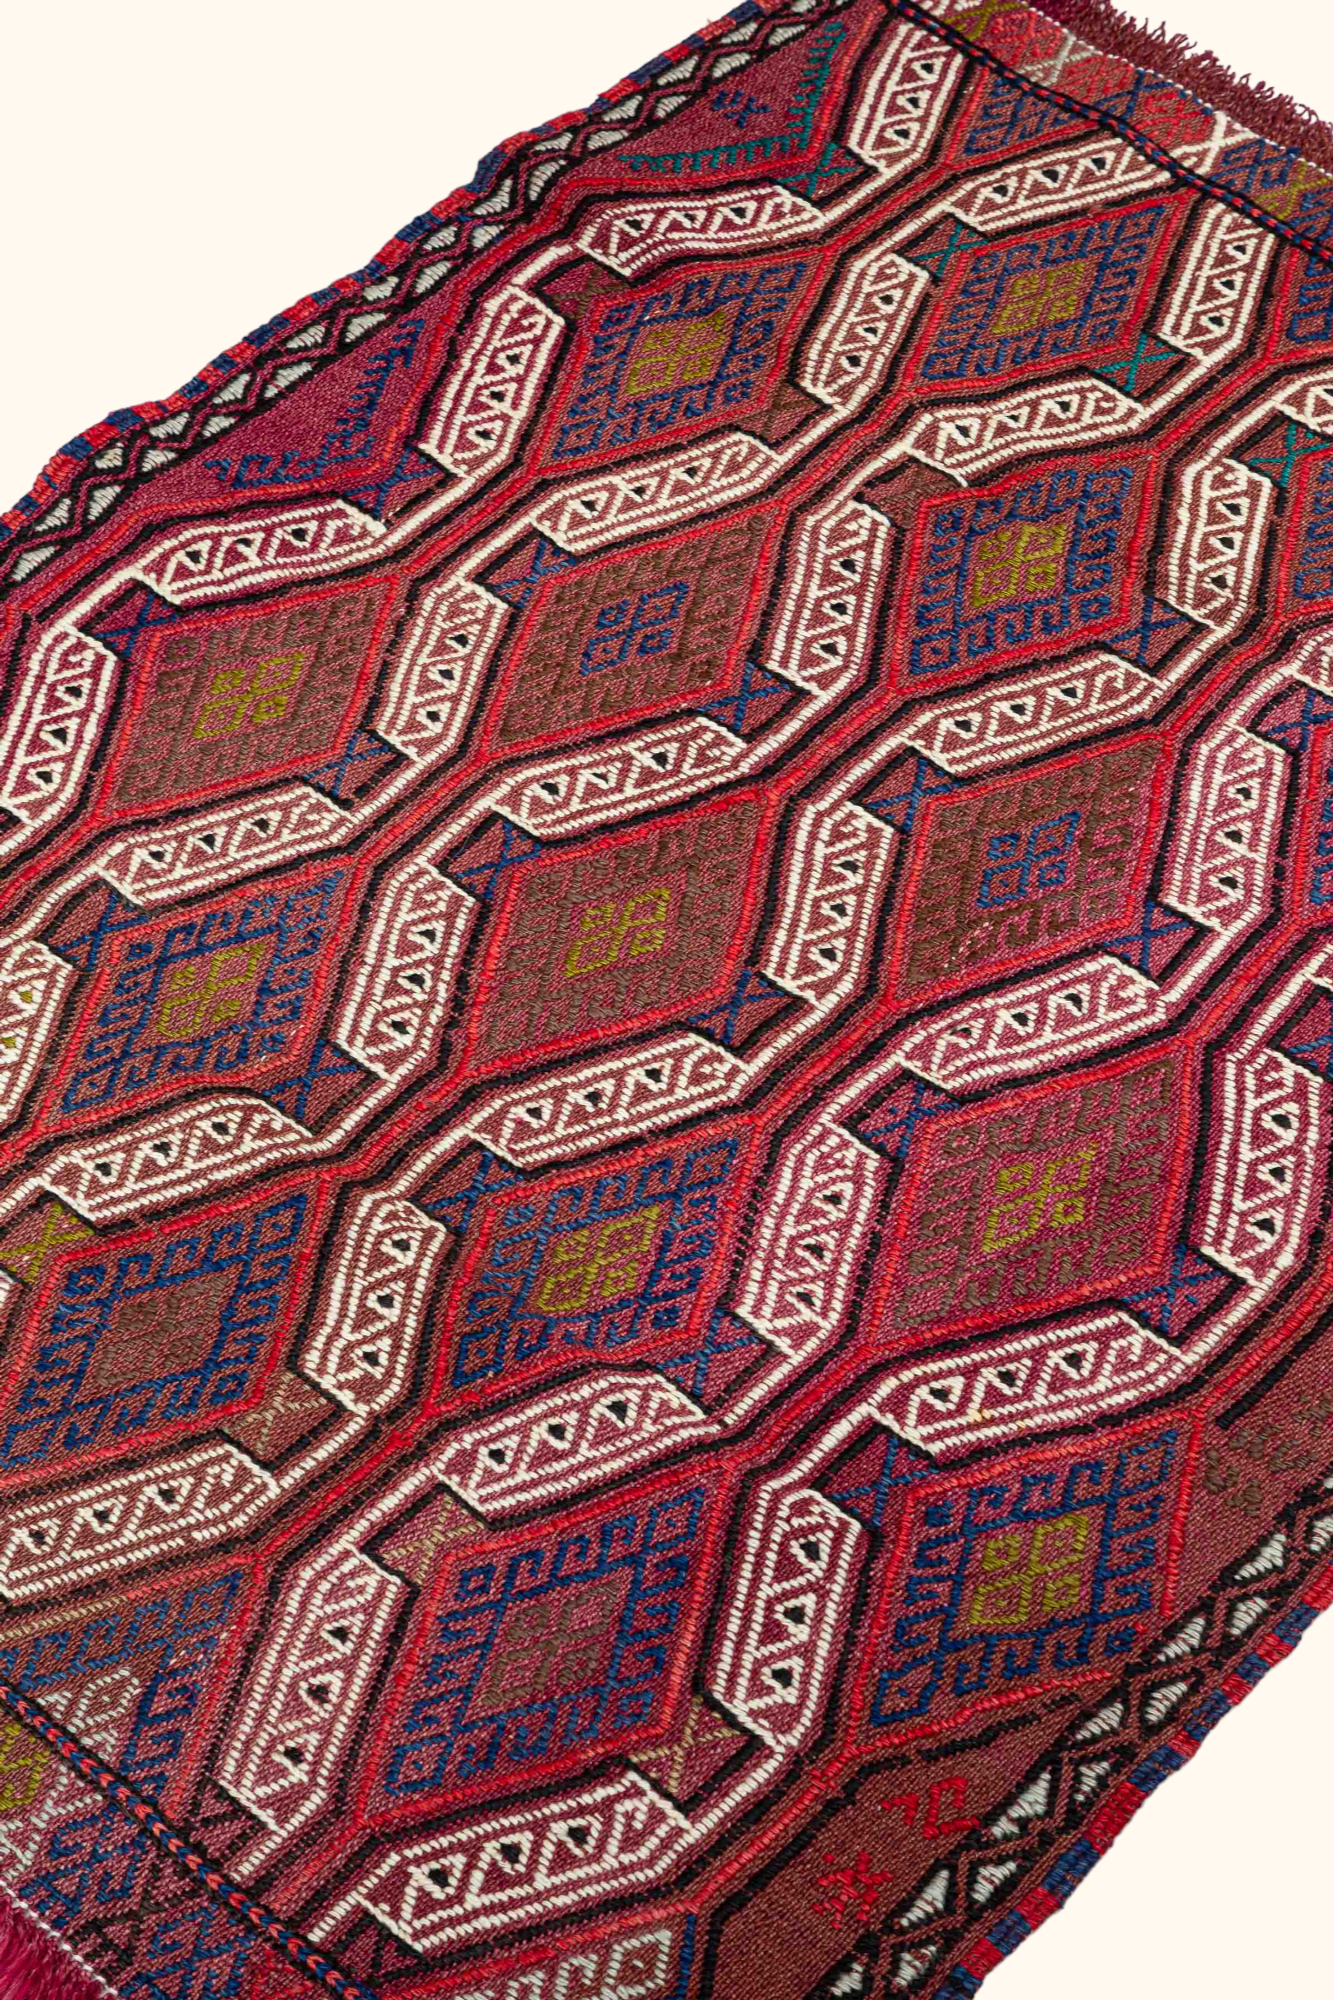 AFYON CICIM Vintage Kelim rug 114cm x 85cm